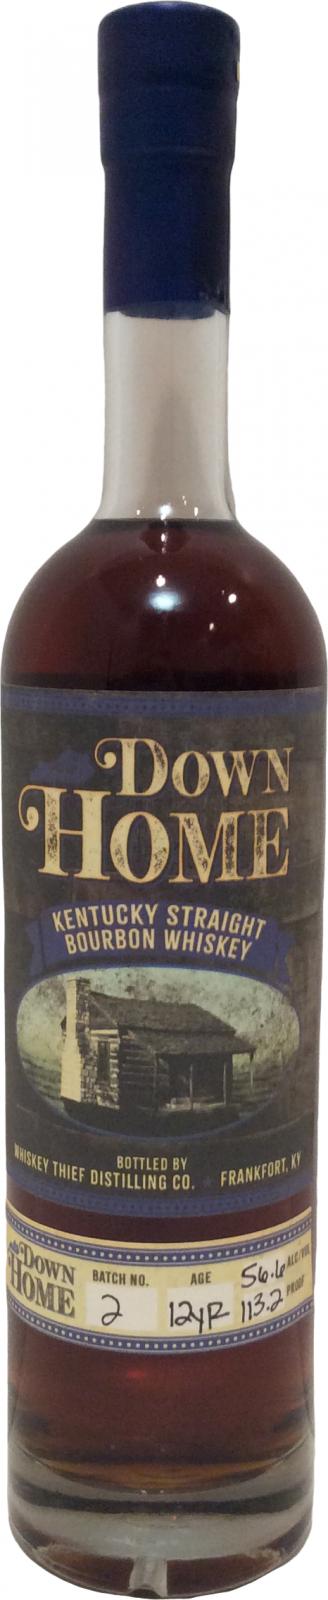 Down Home Bourbon 12 Year Batch #2 113.2 proof Kentucky Straight Bourbon Whiskey